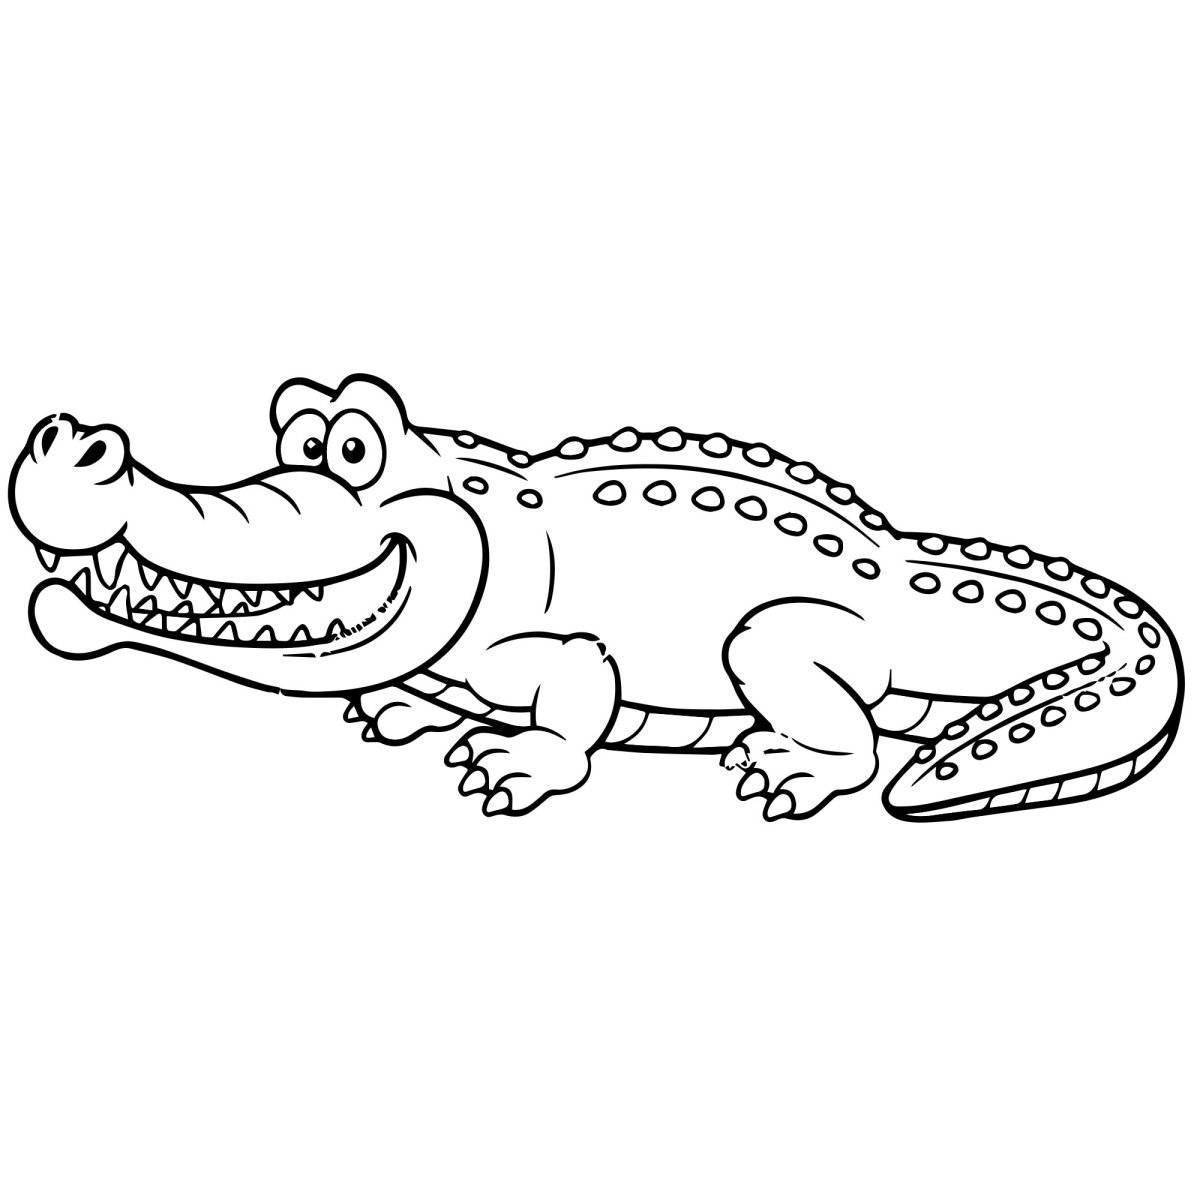 Раскраска крокодилалигатор